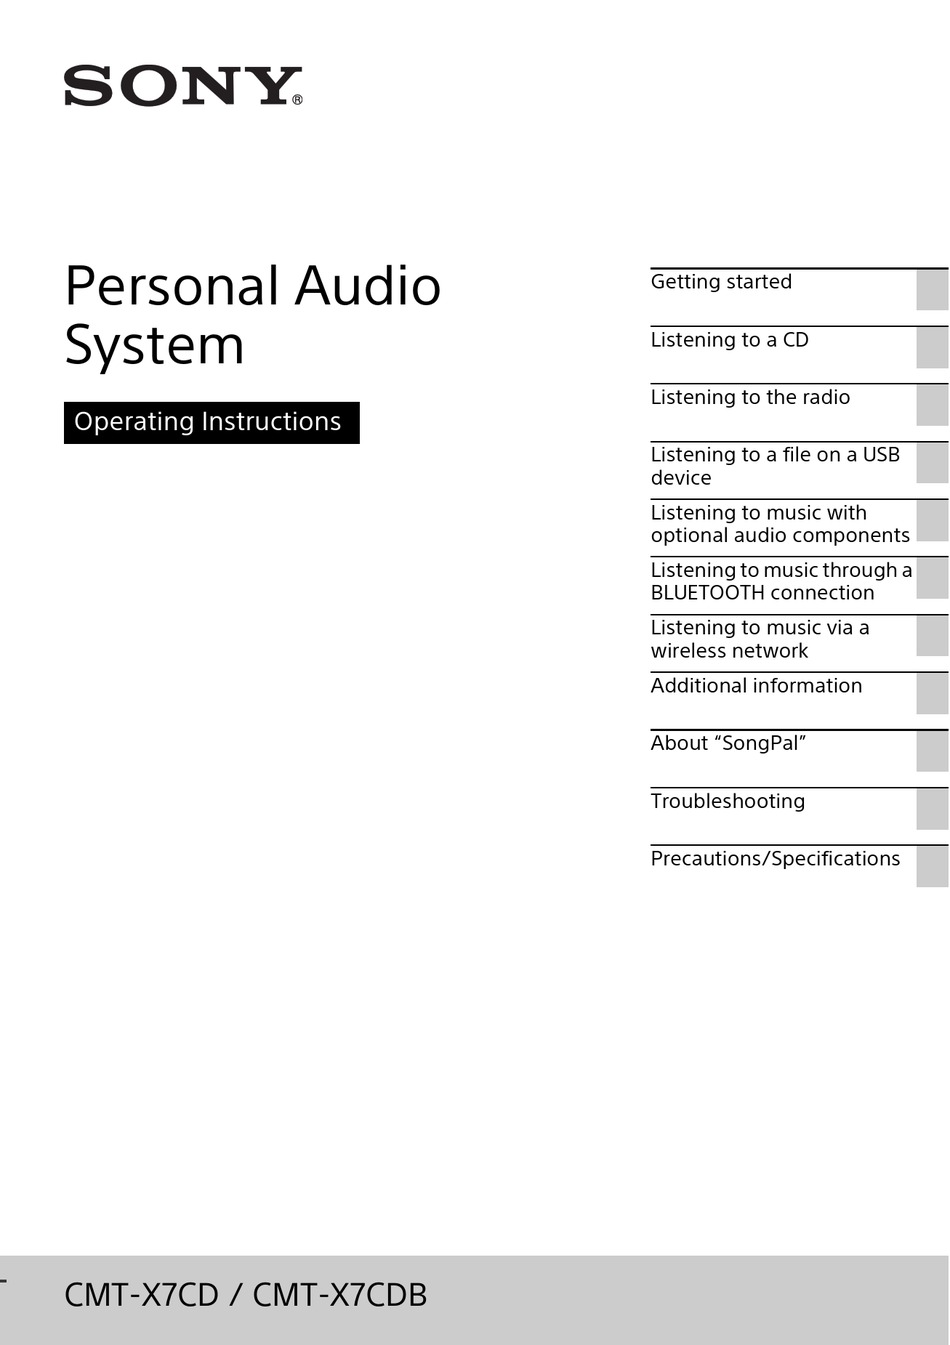 SONY CMT-X7CD OPERATING INSTRUCTIONS MANUAL Pdf Download | ManualsLib